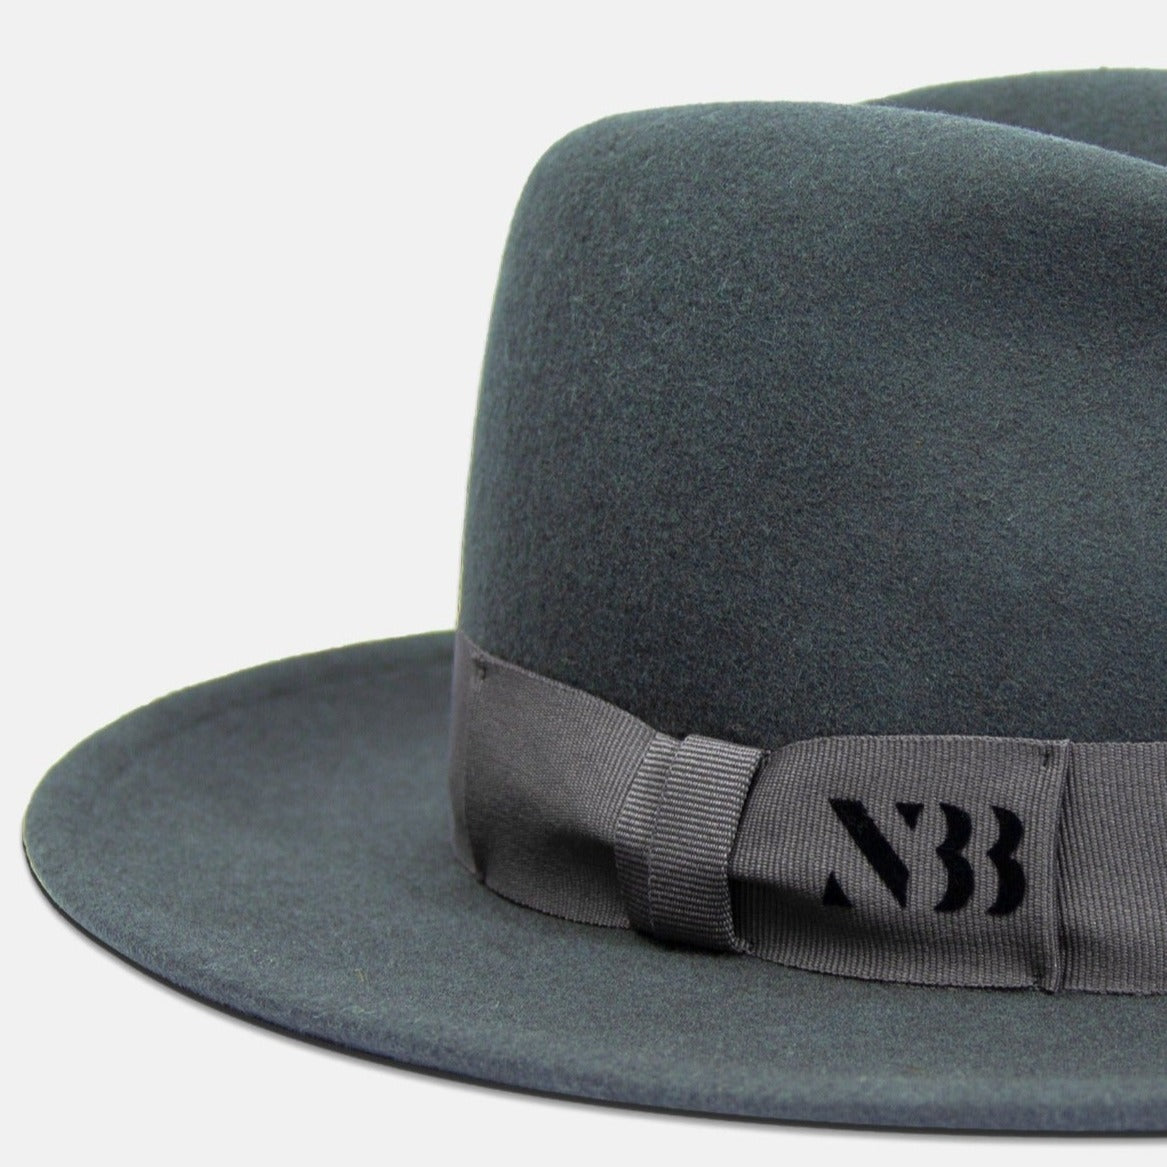 NTHIRTYTHREE - N33 - Fedora Felt Hat - Tilby Grey - handmade in Europe